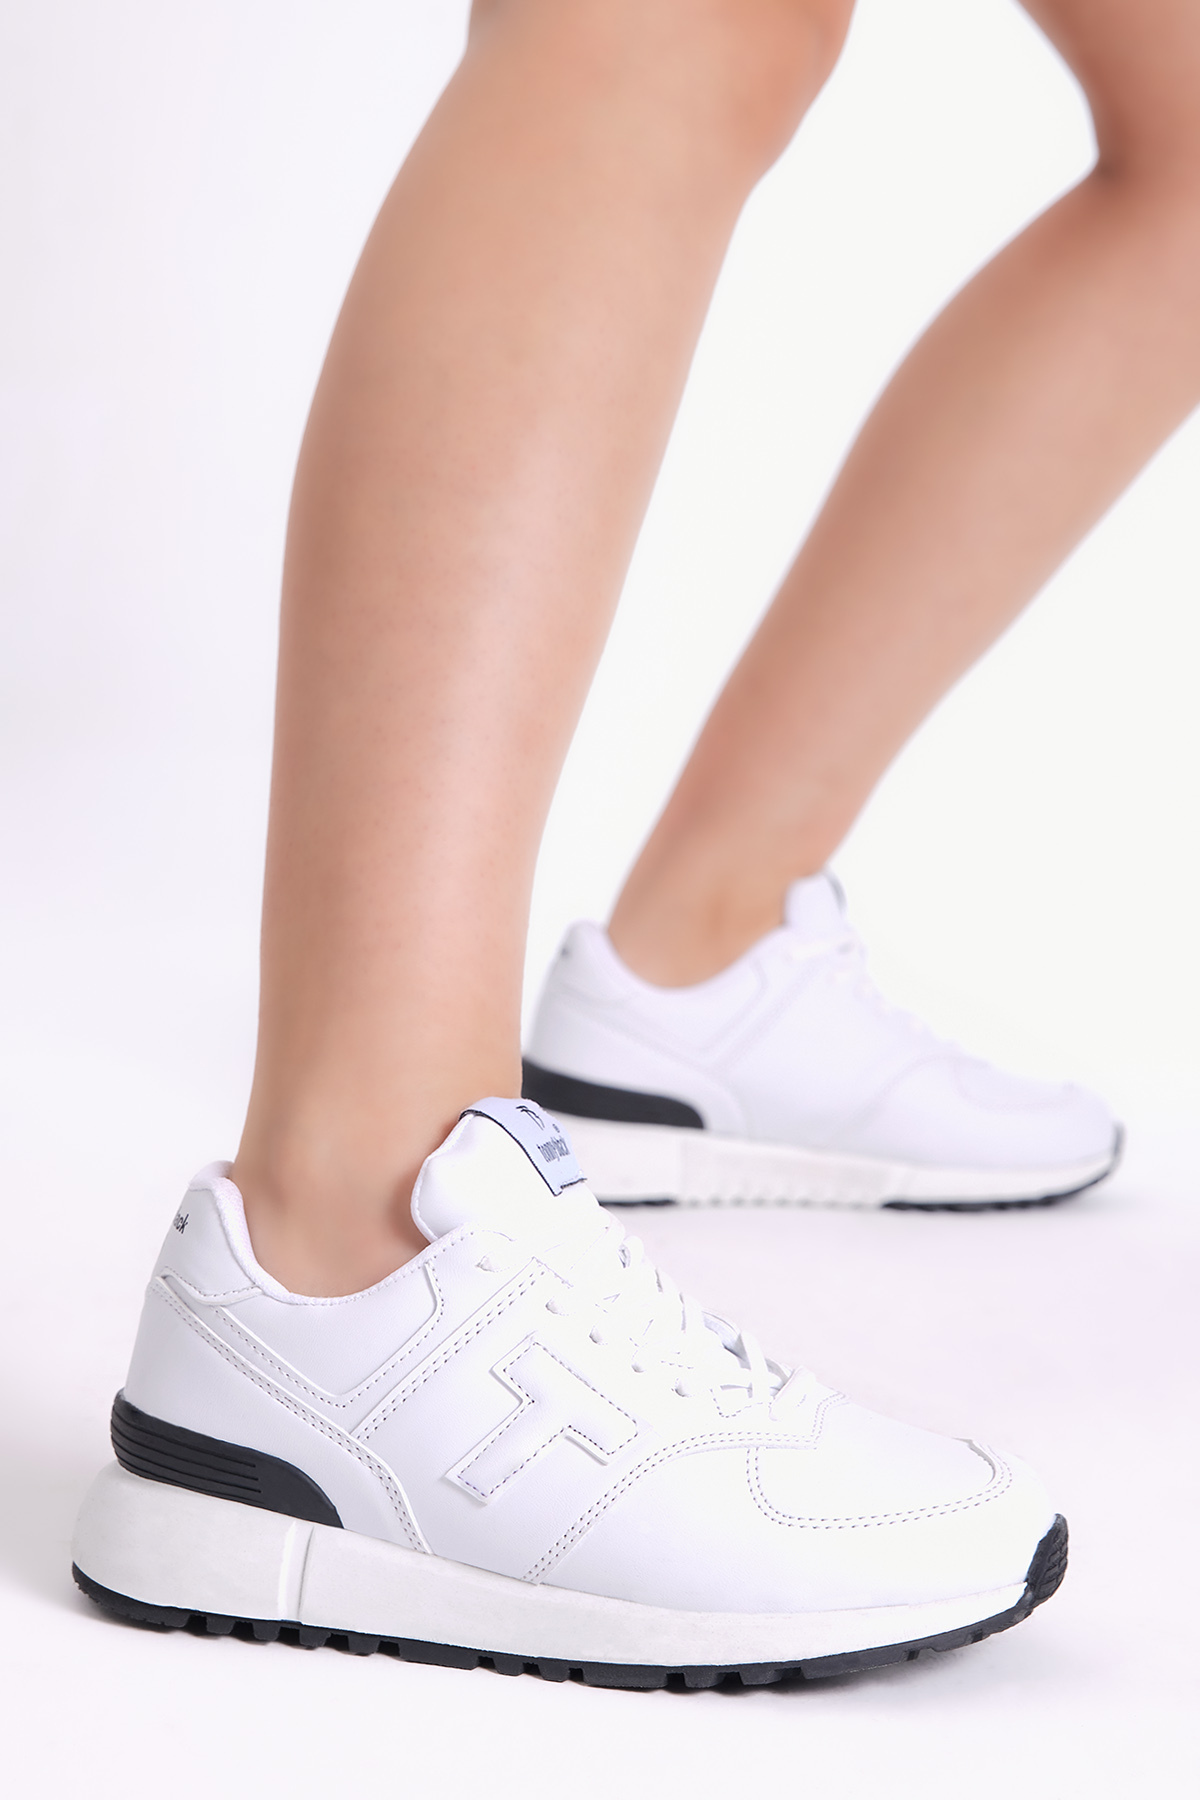 Tonny Black Unisex White Non-Slip Eva Sole Lace-up Sneaker